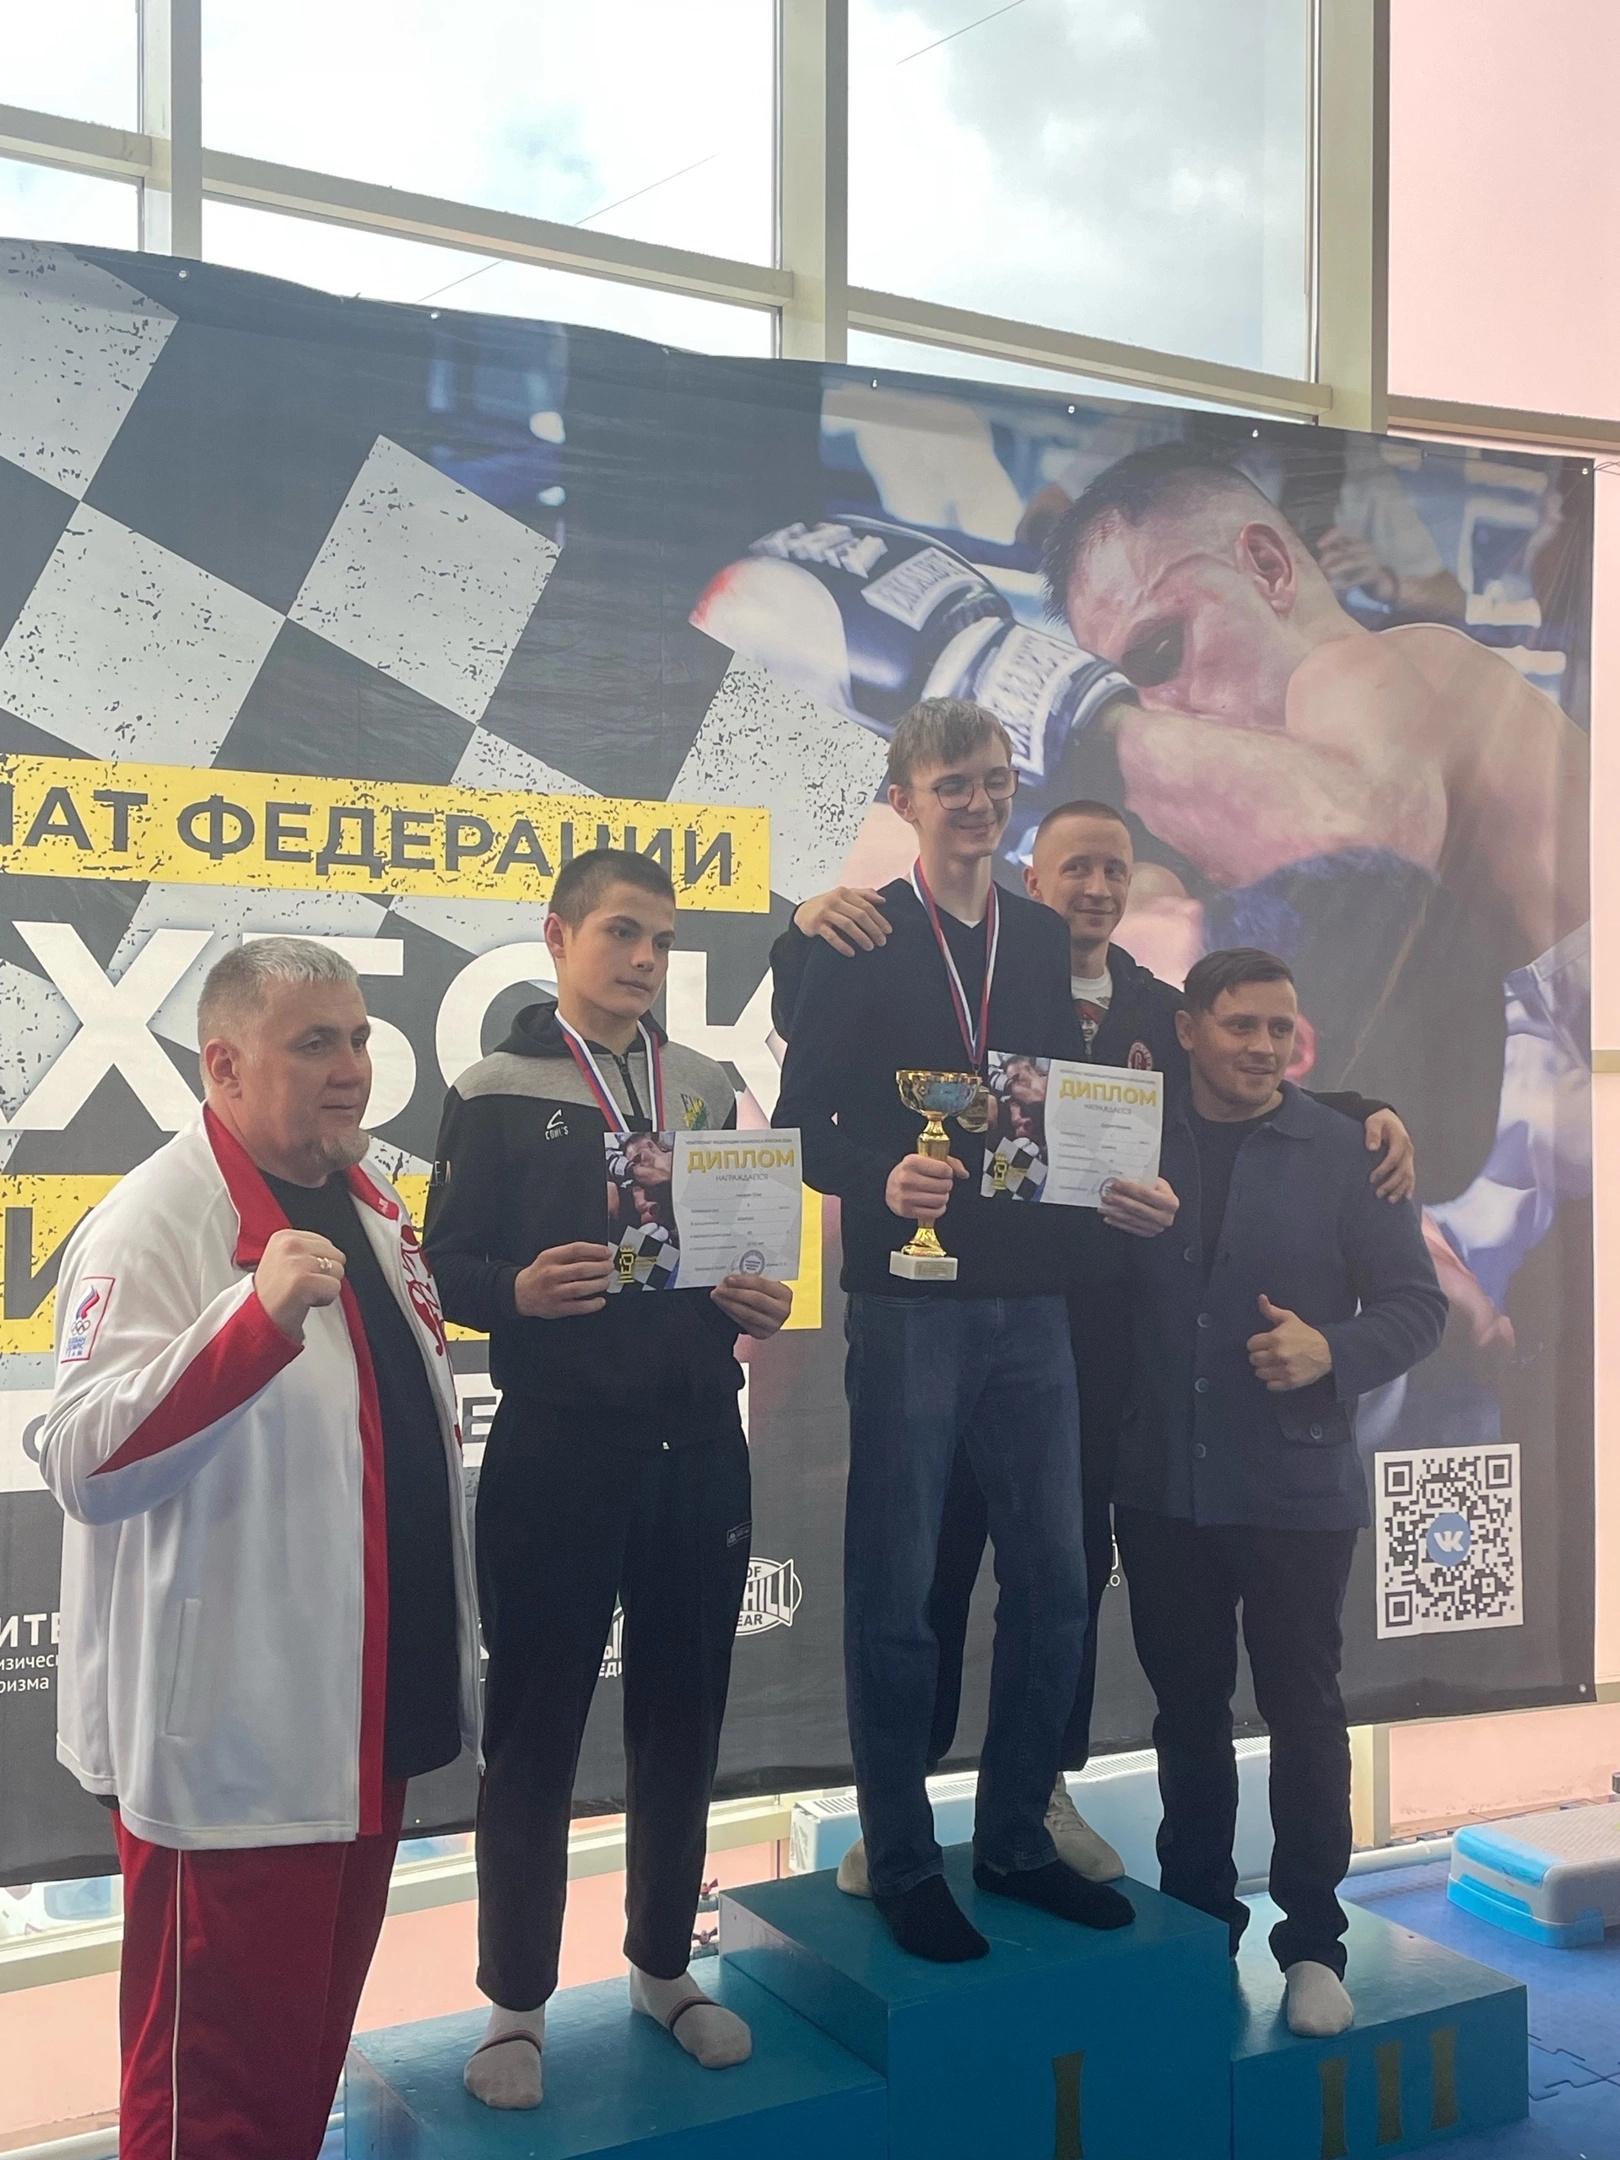 Евгений Климук из Спортивной федерации шахбокса в Петербурге — на фото крайний справа